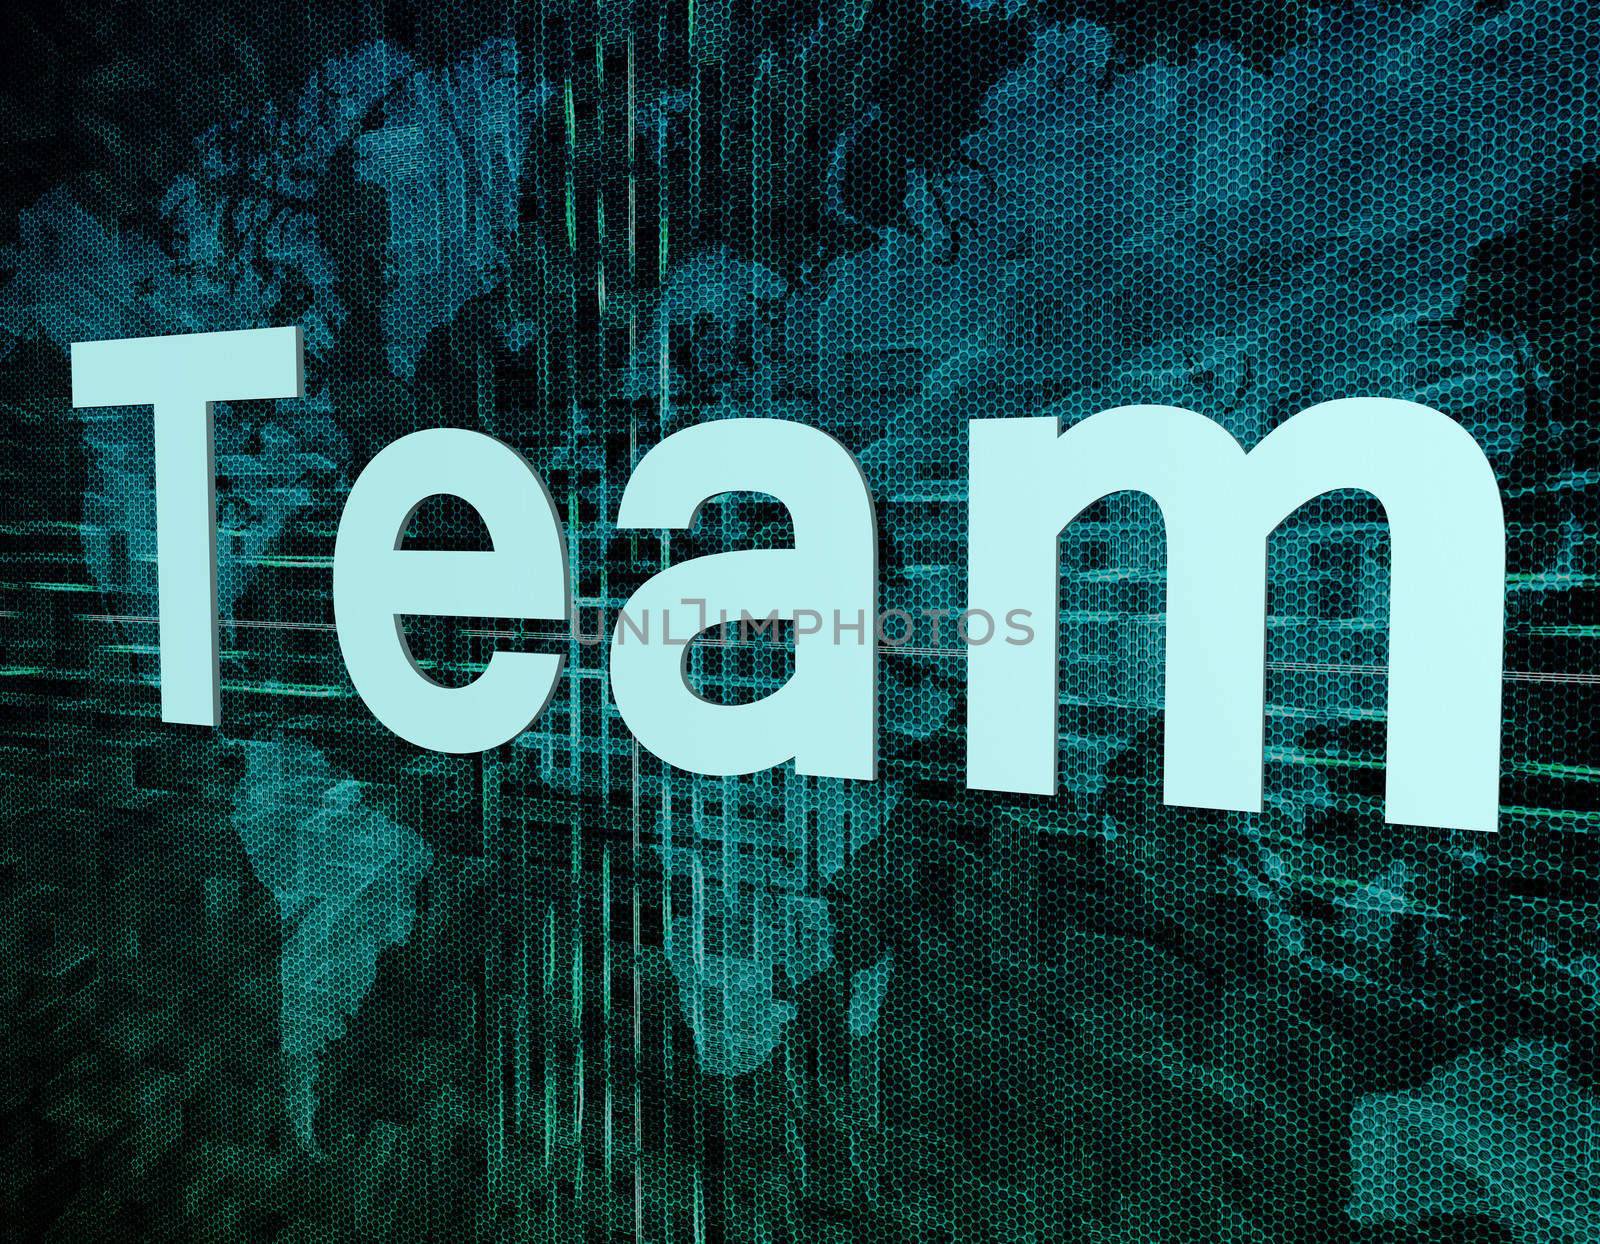 Words on digital world map concept: Team